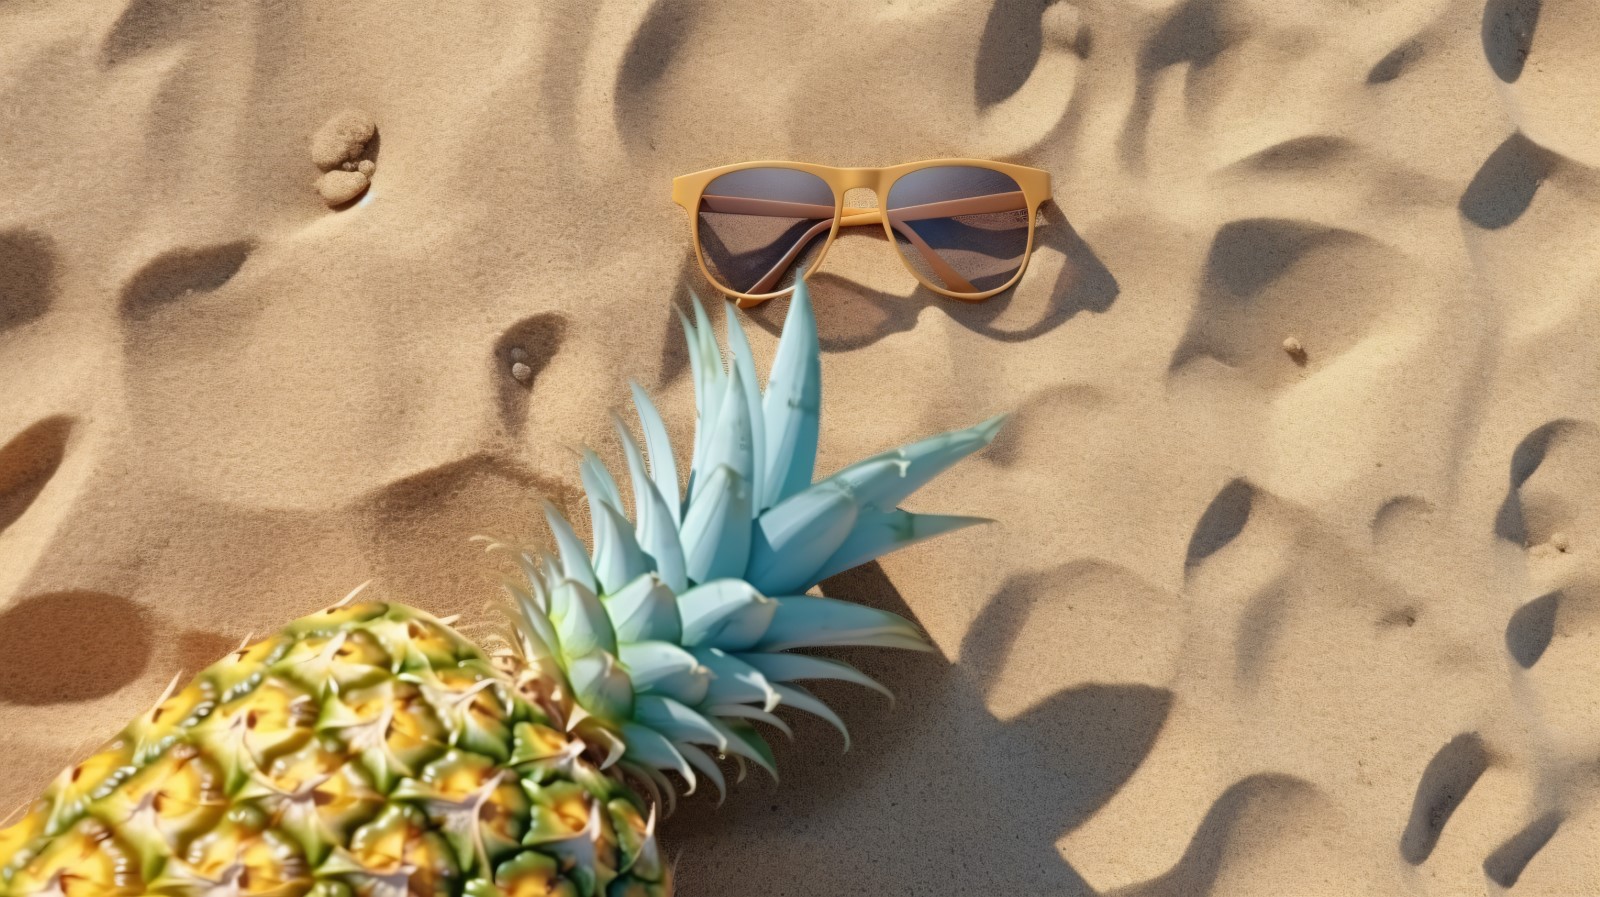 Halved pineapple and a sunglass kept on the sand 167